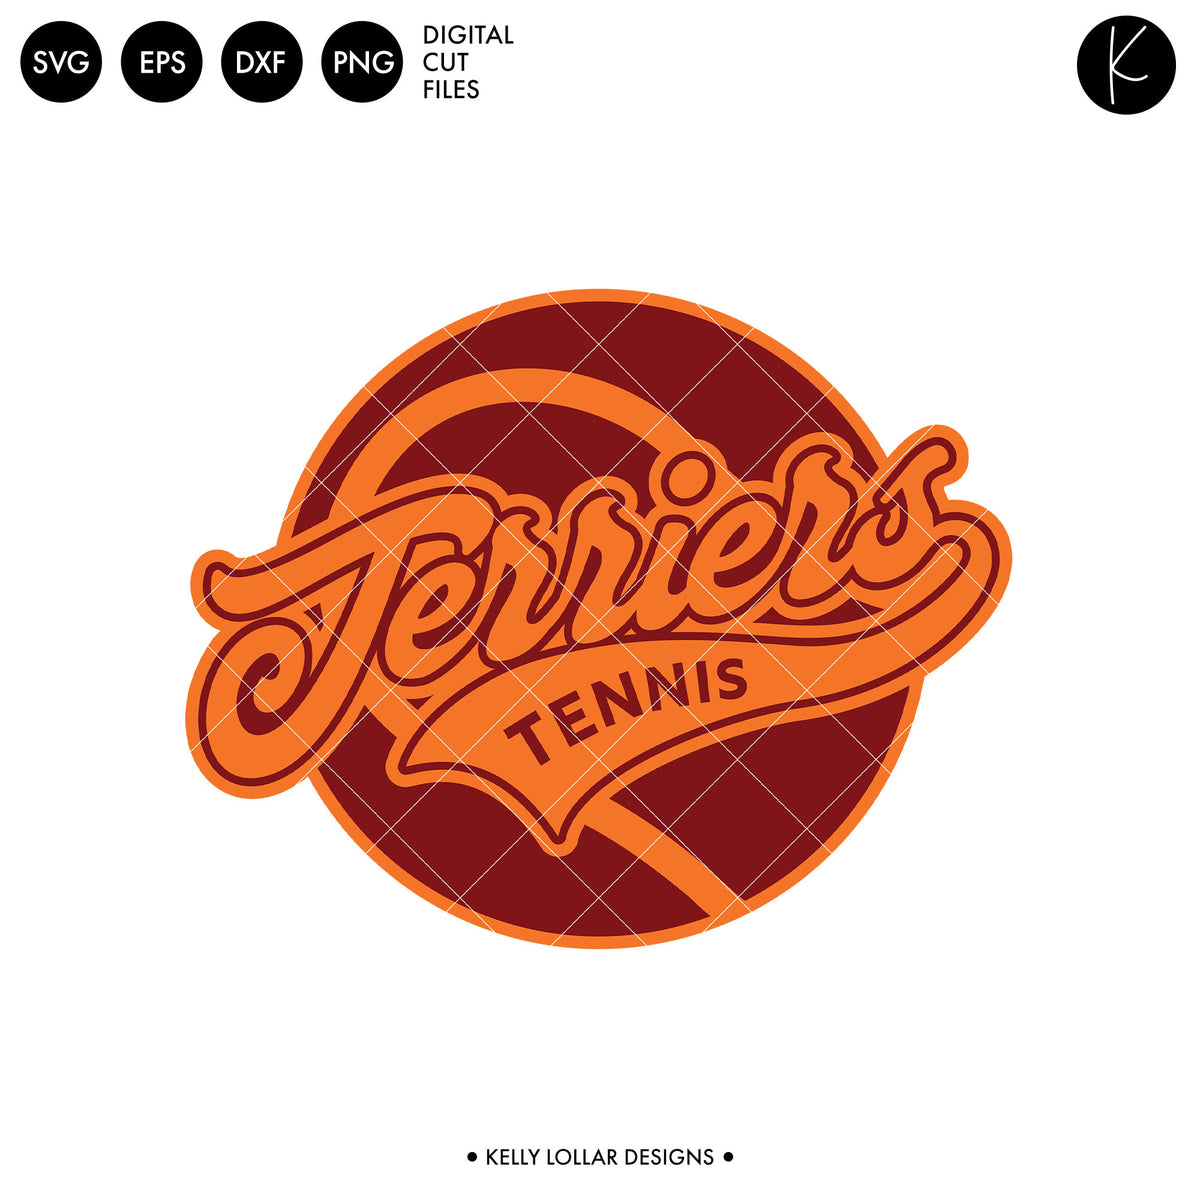 Terriers Tennis Bundle | SVG DXF EPS PNG Cut Files